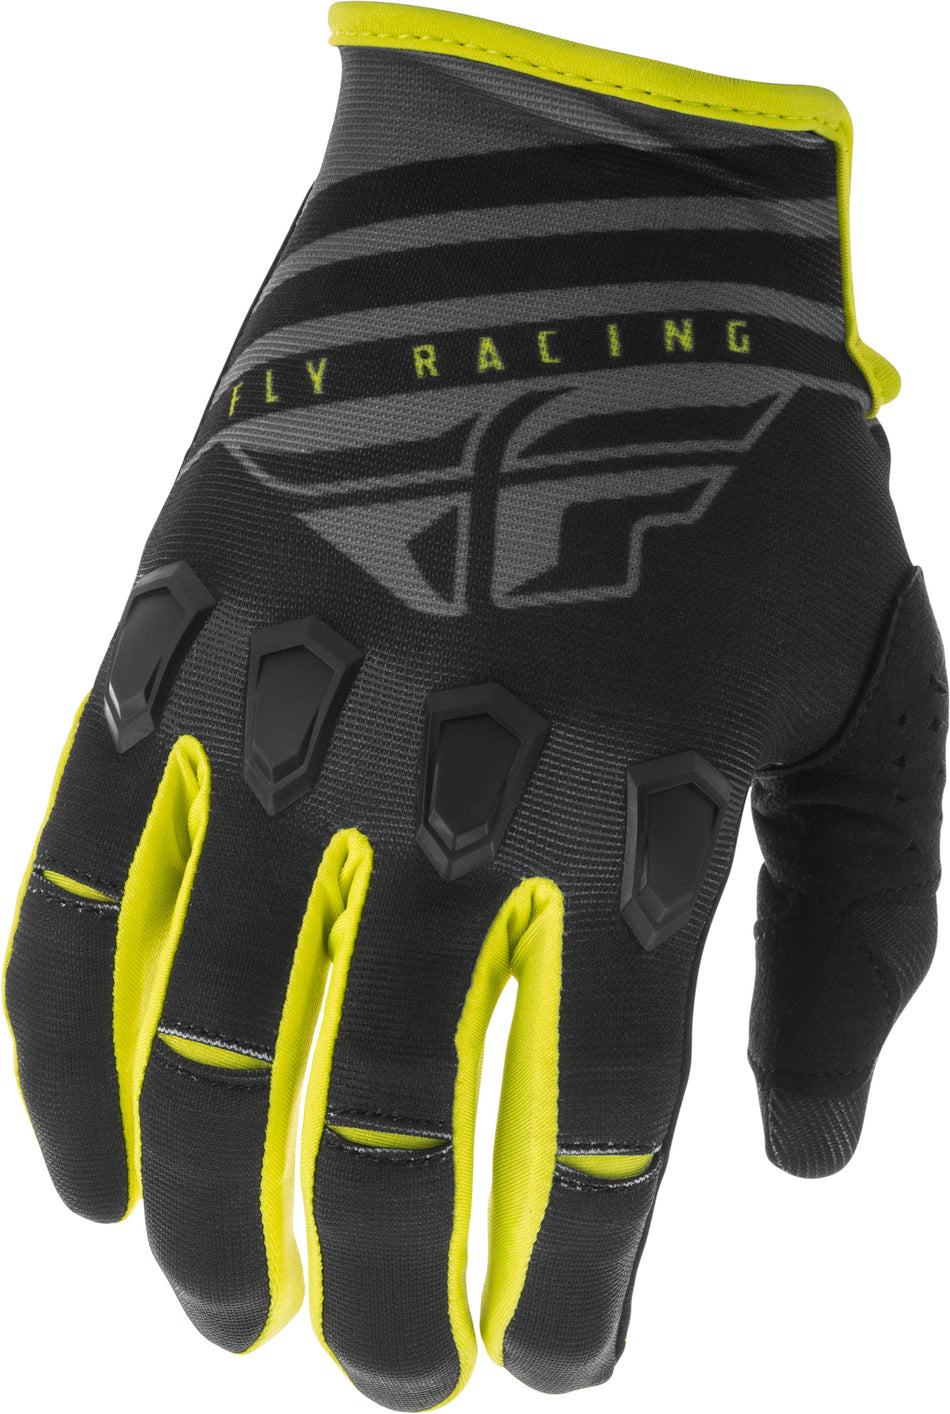 FLY RACING Kinetic K220 Gloves Black/Grey/Hi-Vis Sz 11 373-51511